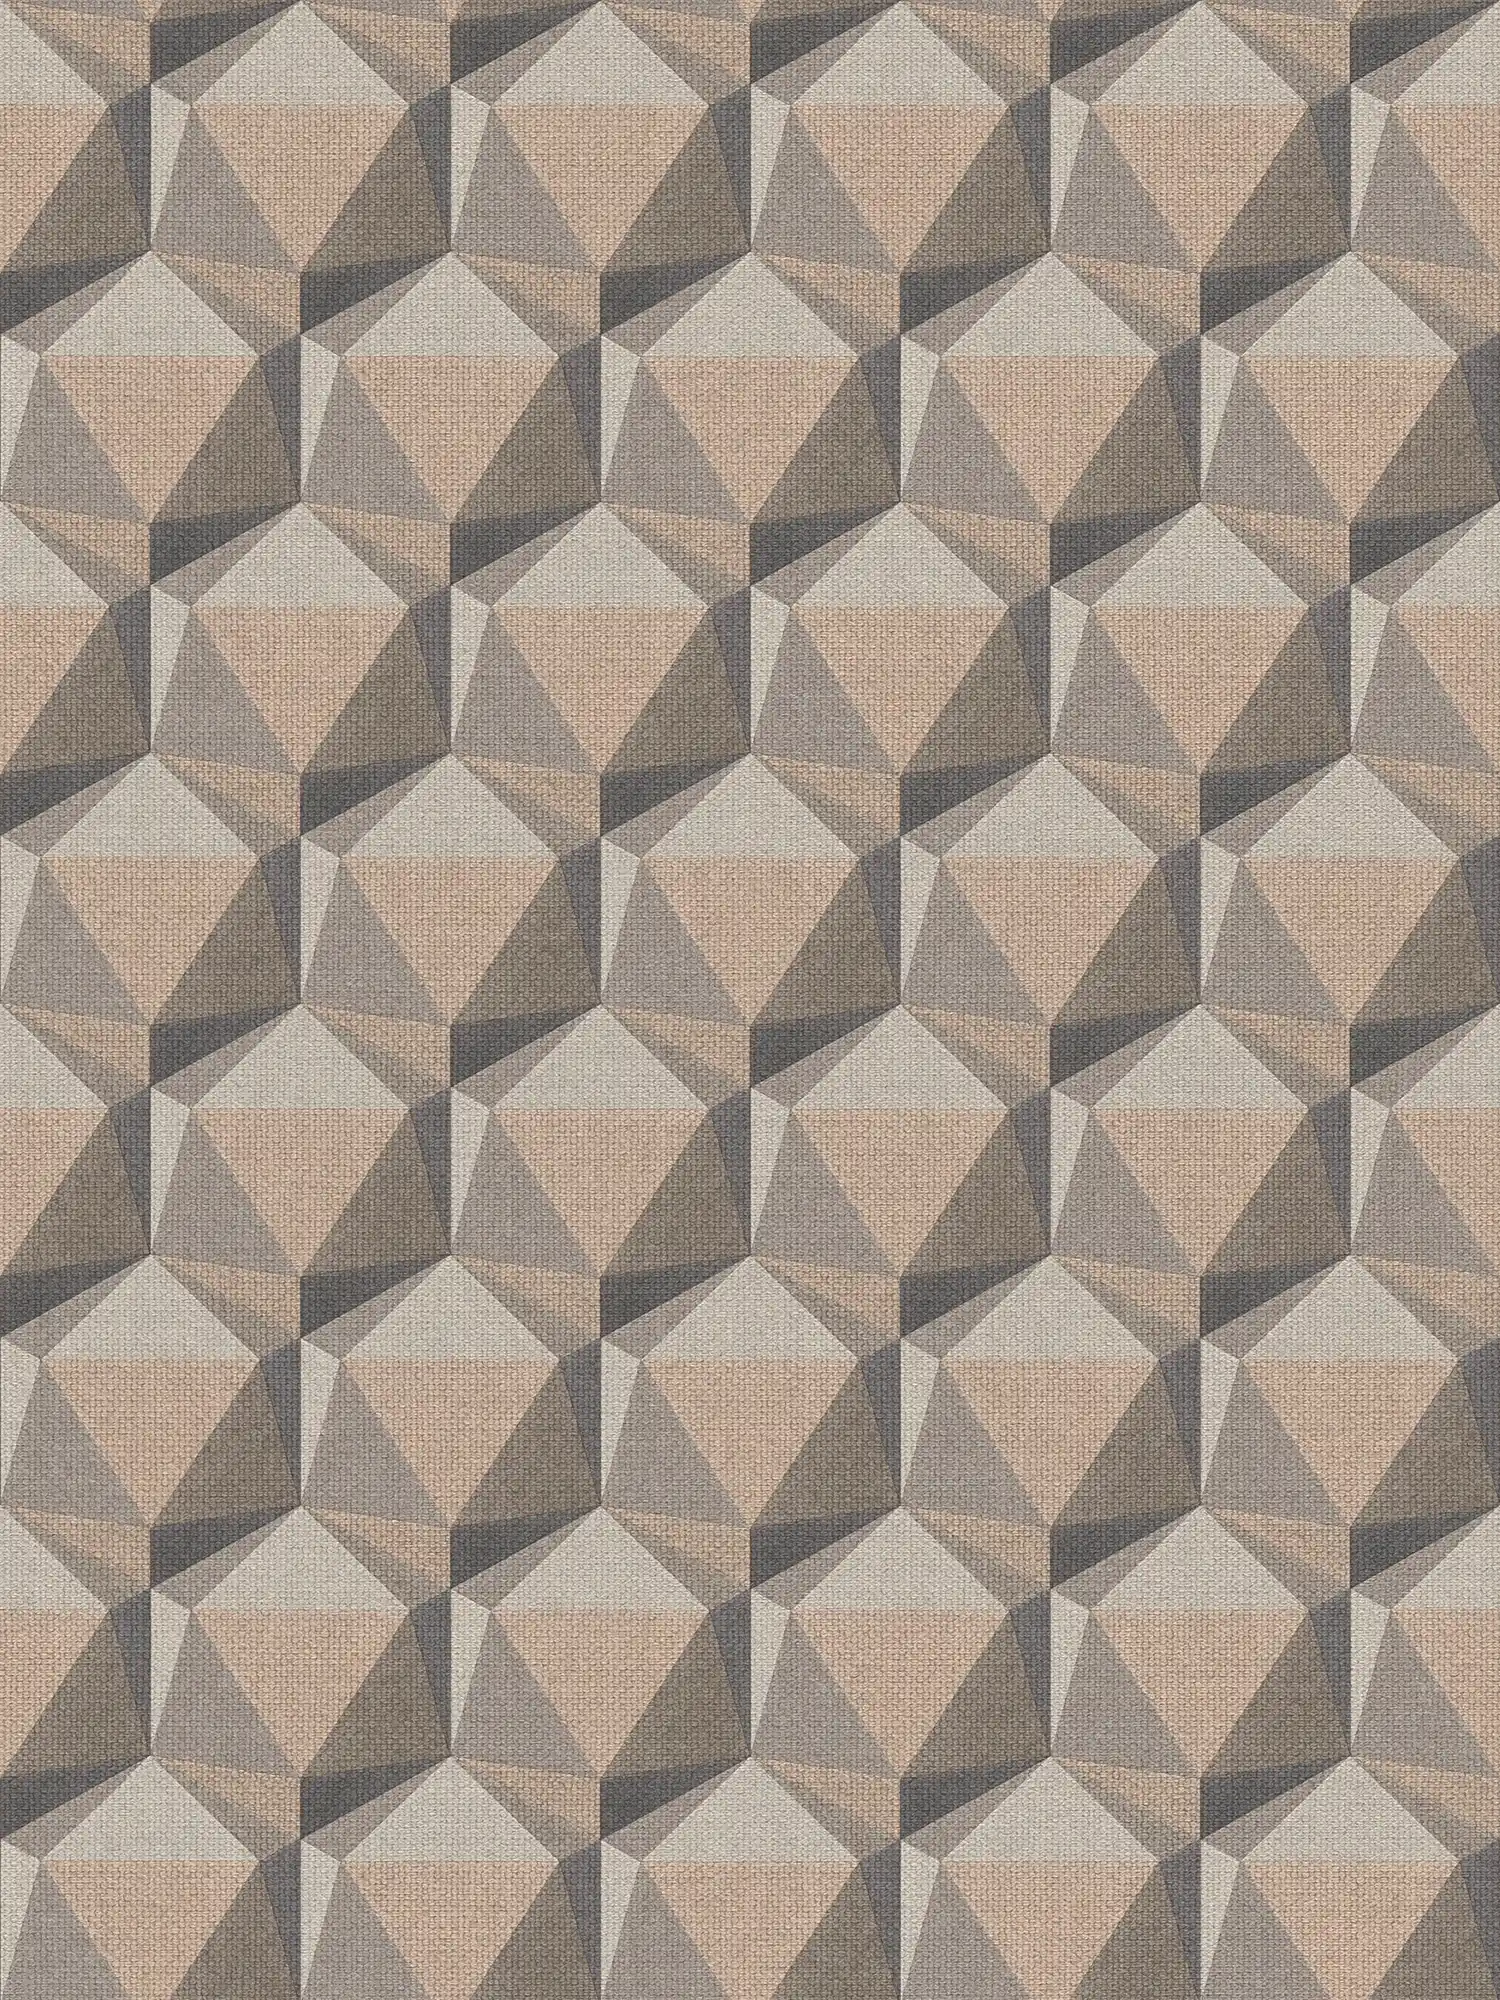 3D wallpaper with graphic pattern in retro look - beige, cream, grey
